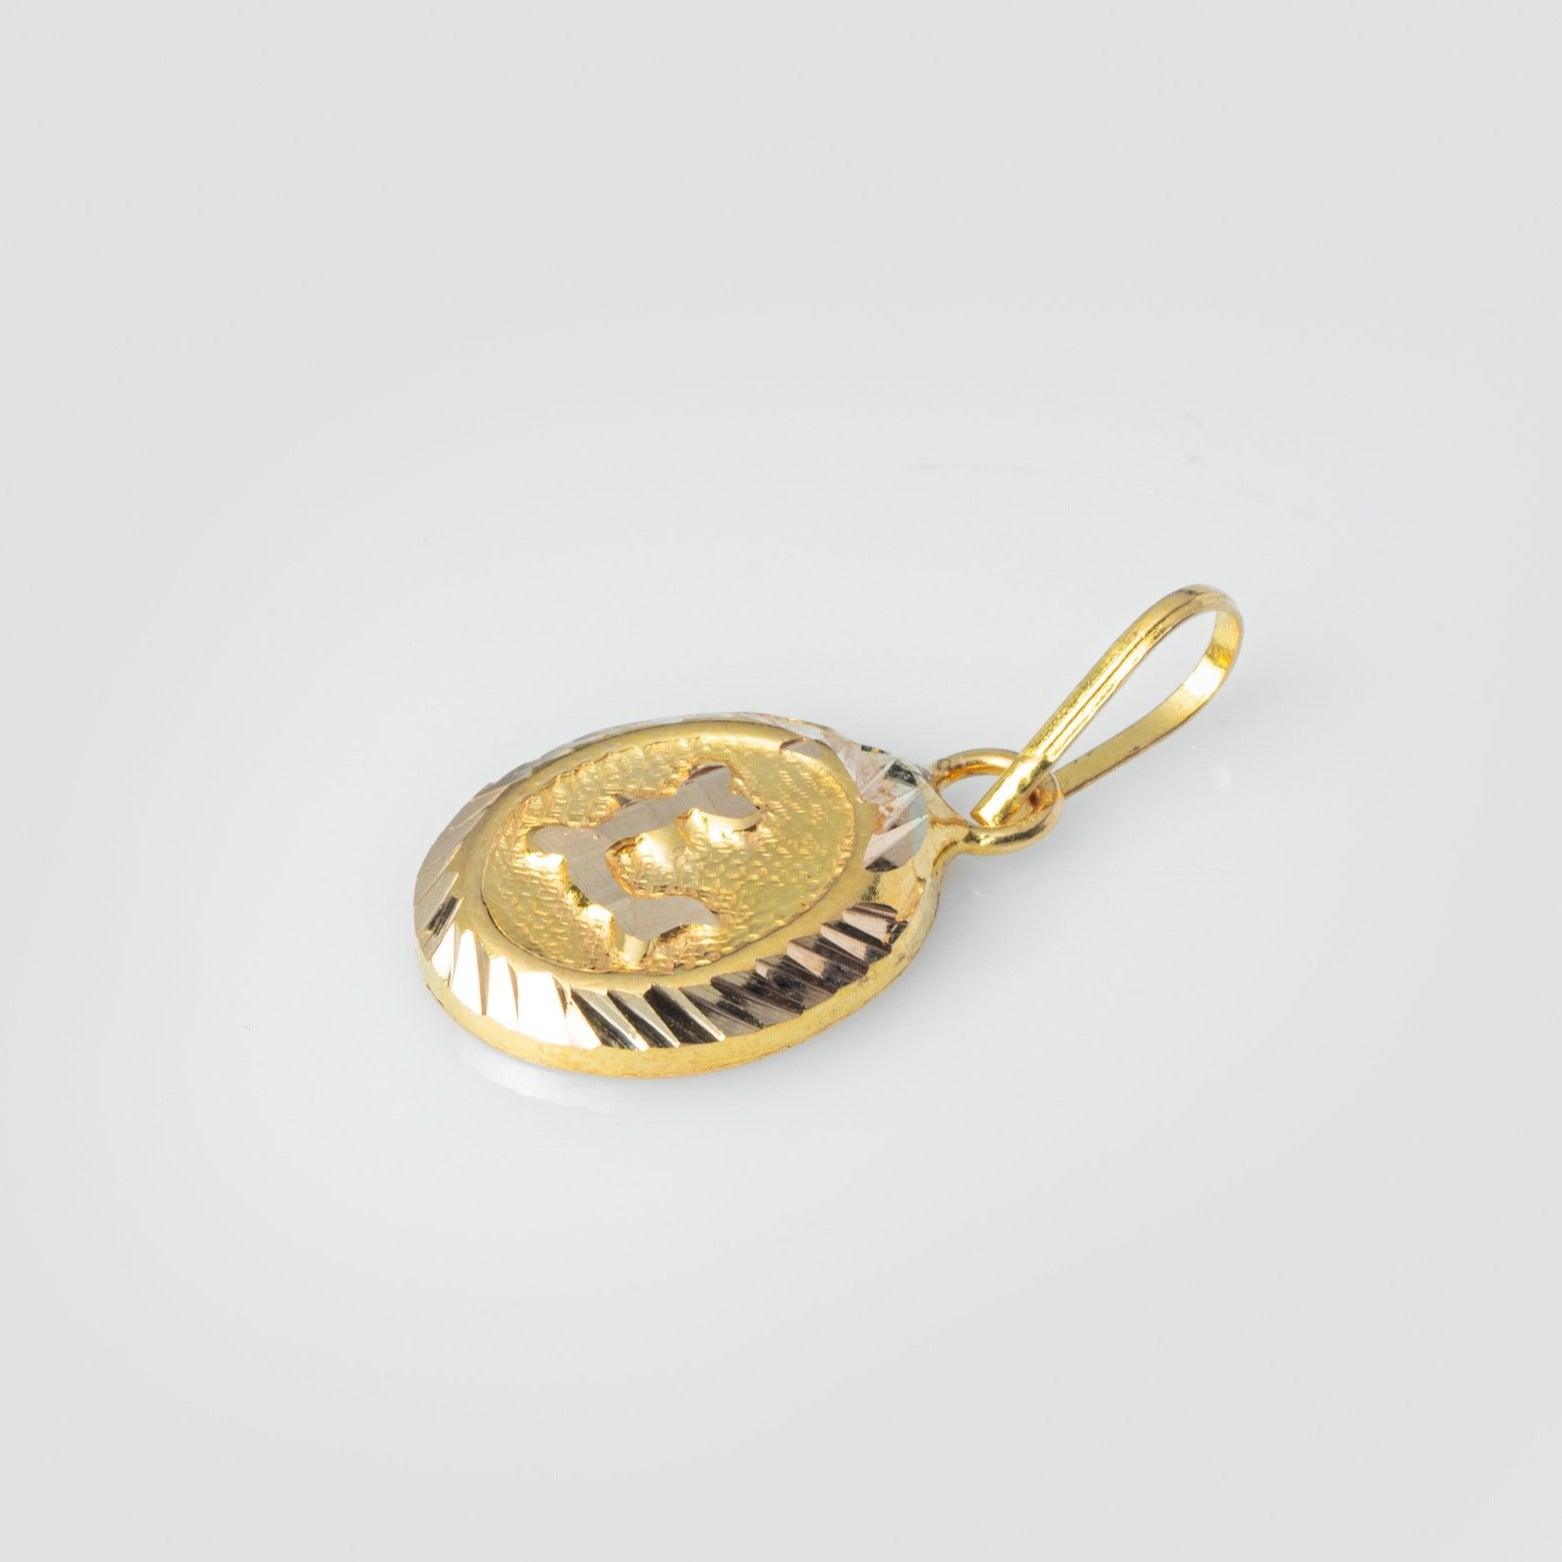 'L' 22ct Gold Initial Pendant P-7550 - Minar Jewellers